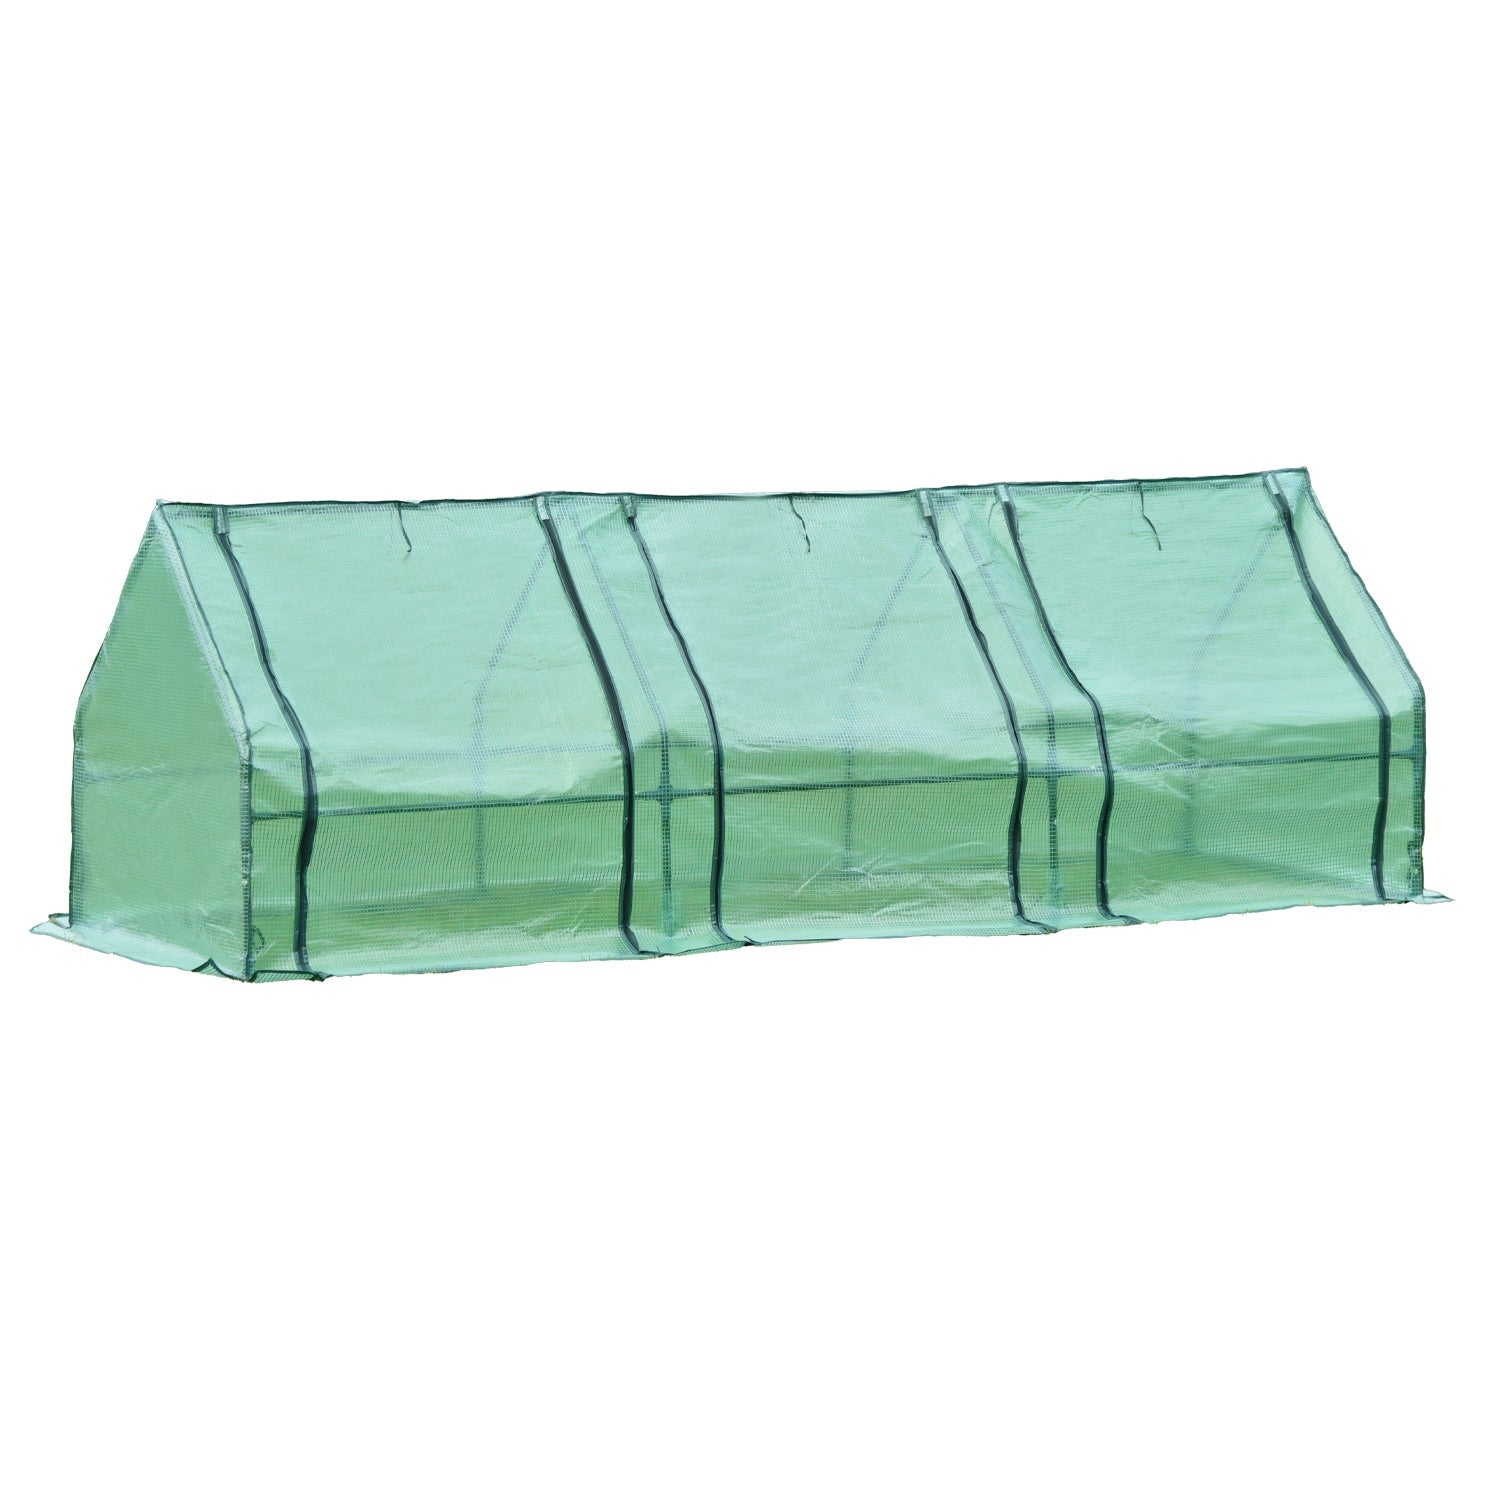 6 ft. x 3 ft. x 3 ft. /9 ft. x 3 ft. x 3 ft. Mini Greenhouse with 2 Zipper Doors Greenhouse Aoodor 9 x 3 x 3 ft. Green 